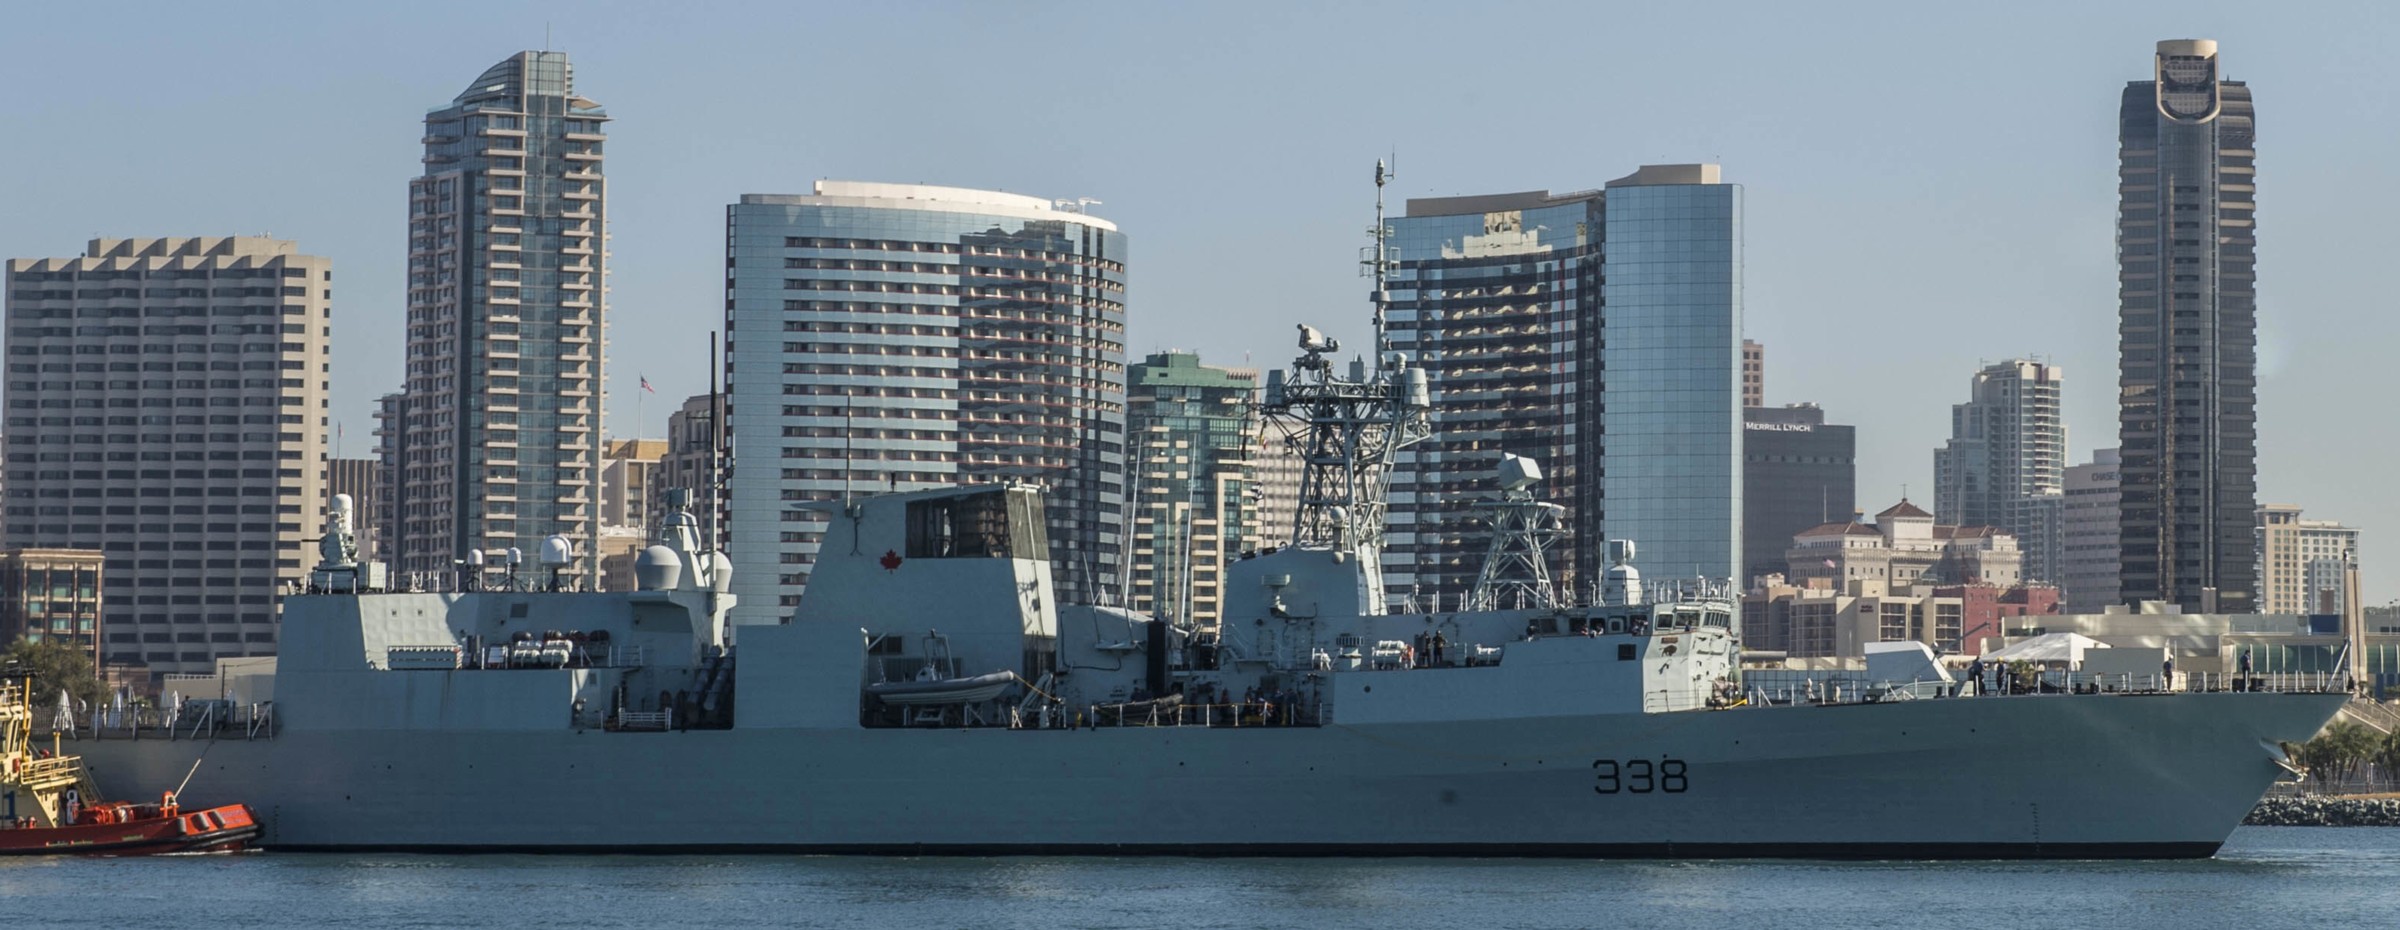 ffh-338 hmcs winnipeg halifax class helicopter patrol frigate ncsm royal canadian navy 19